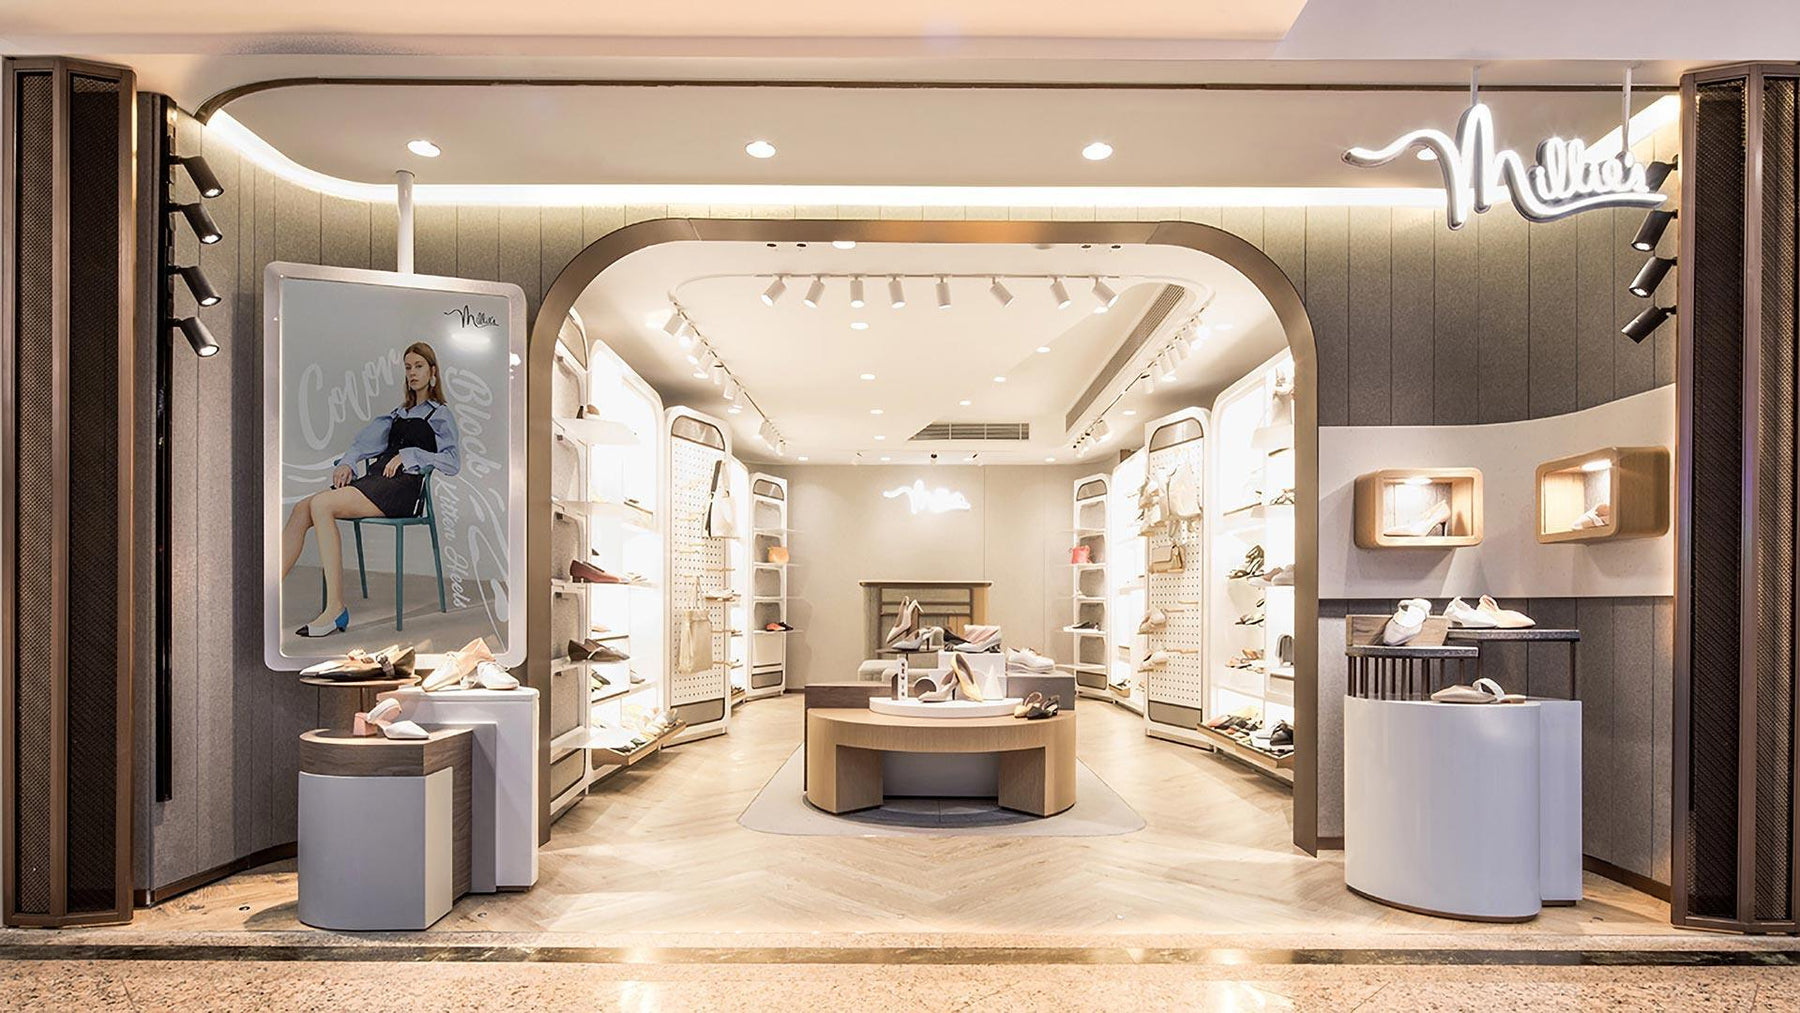 Millie’s-Interior and Branding Concept - M2 Retail